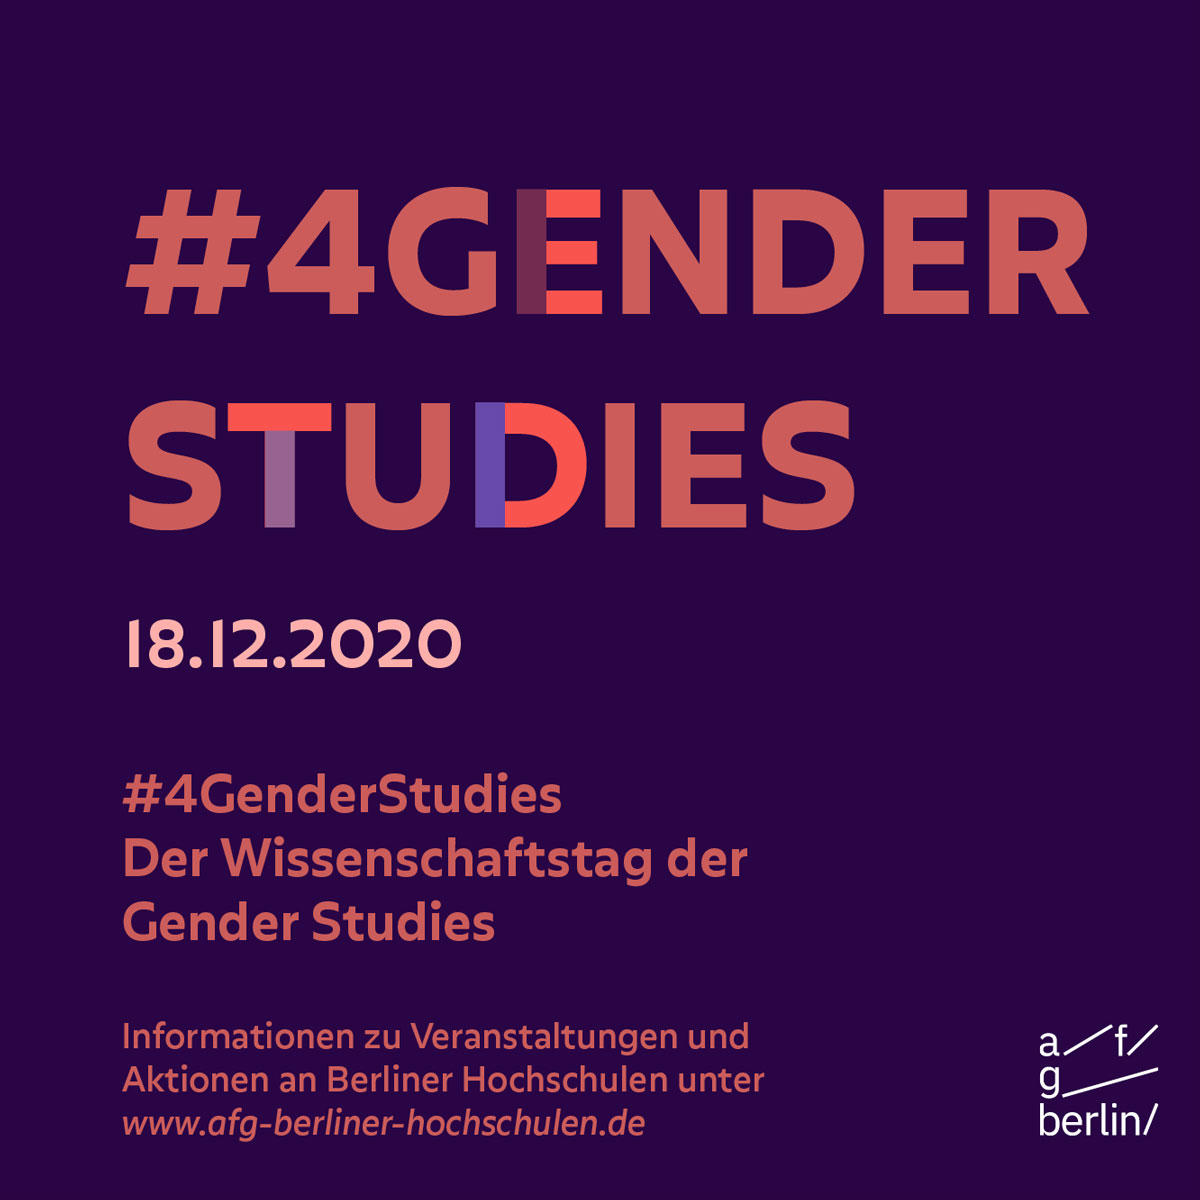 #4GenderStudies, 18.12.2020